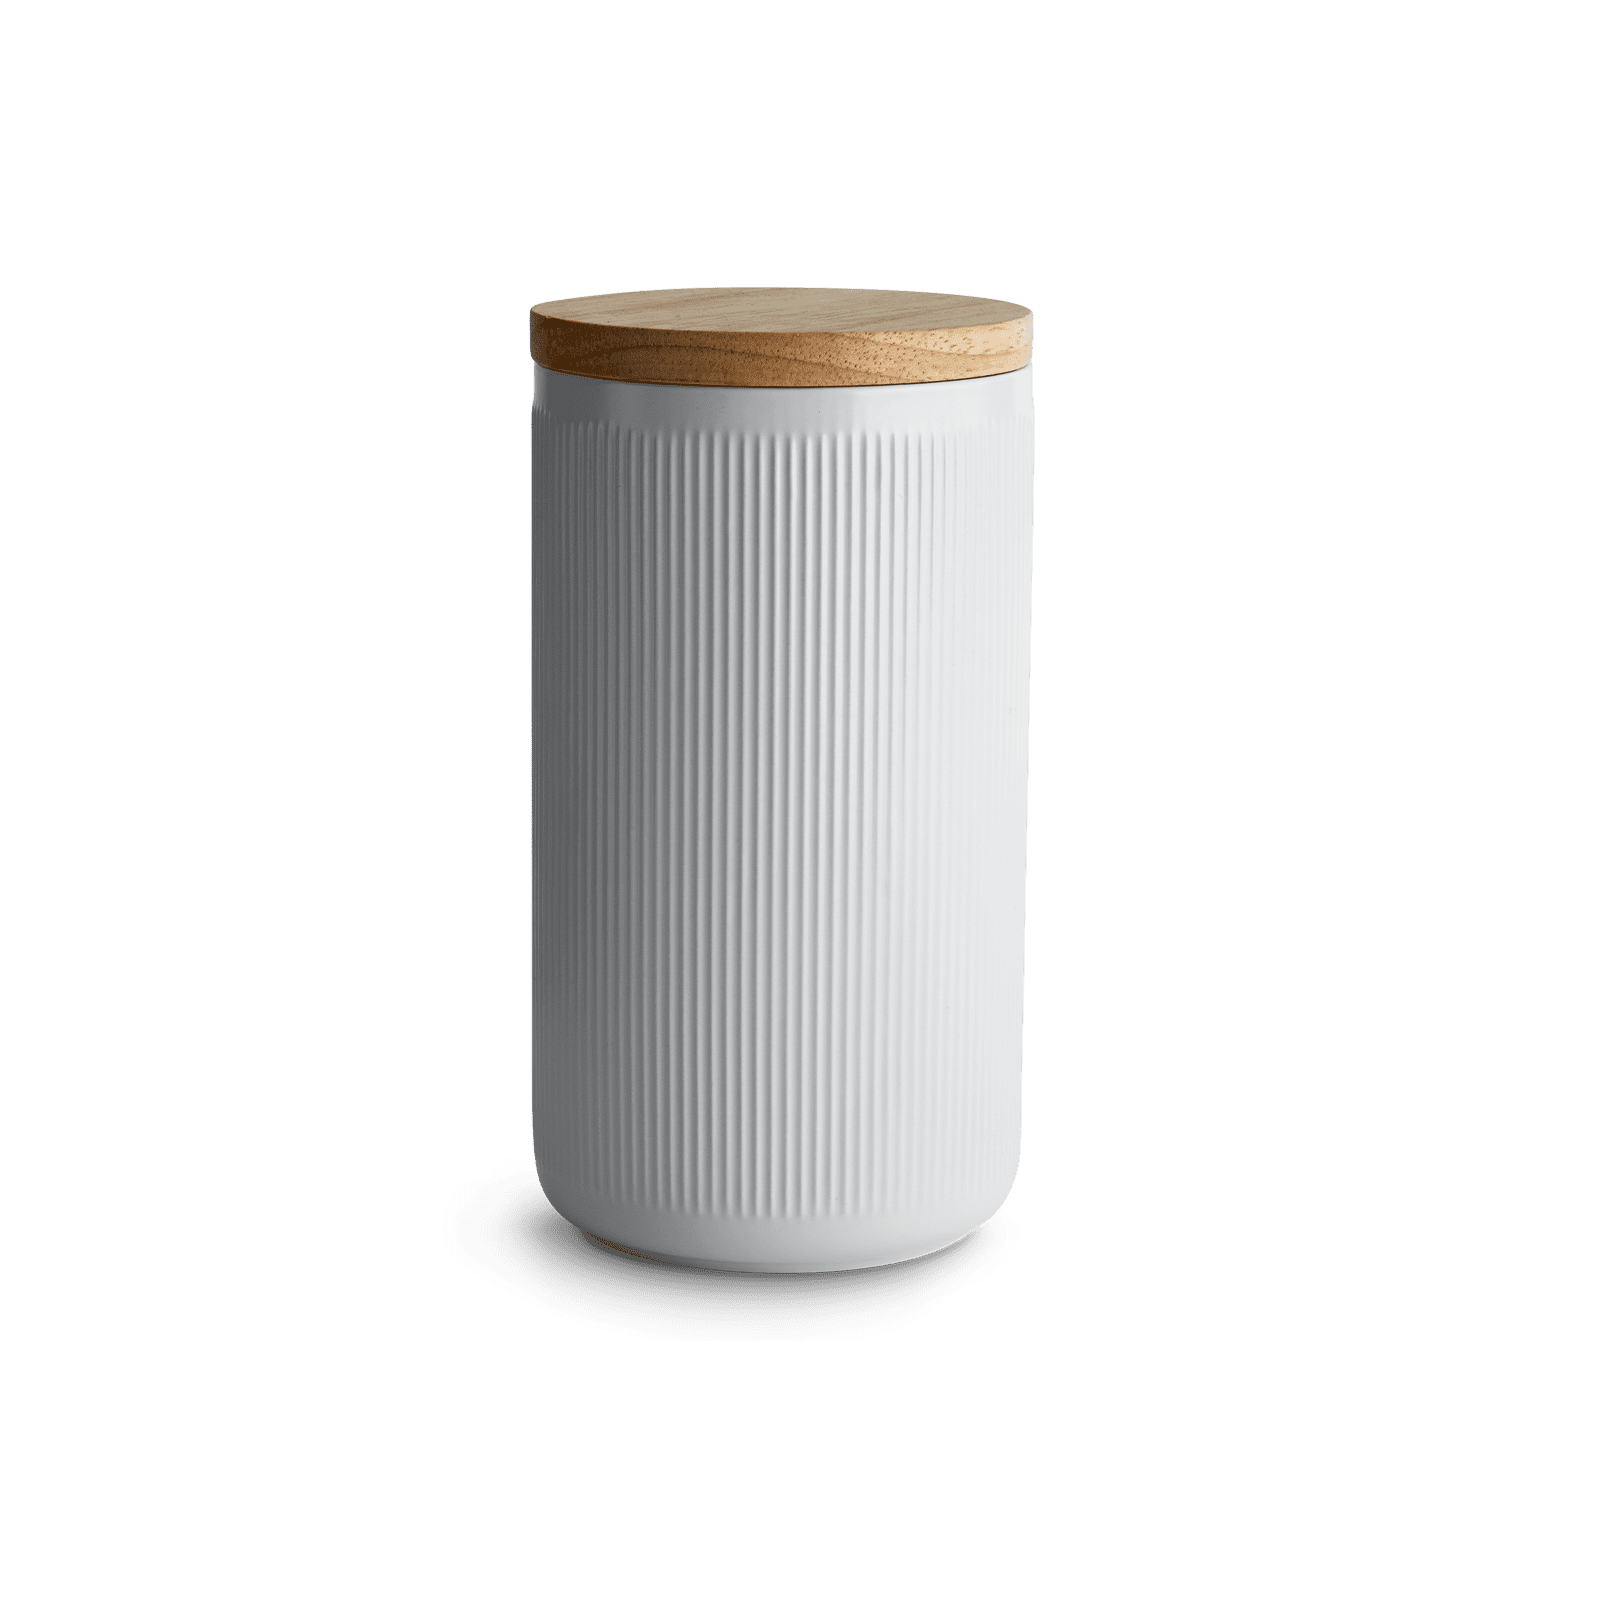 Keramik Vorratsdosen mit Holzdeckel Stripes - 10,1 x 18,3 cm - hellgrau